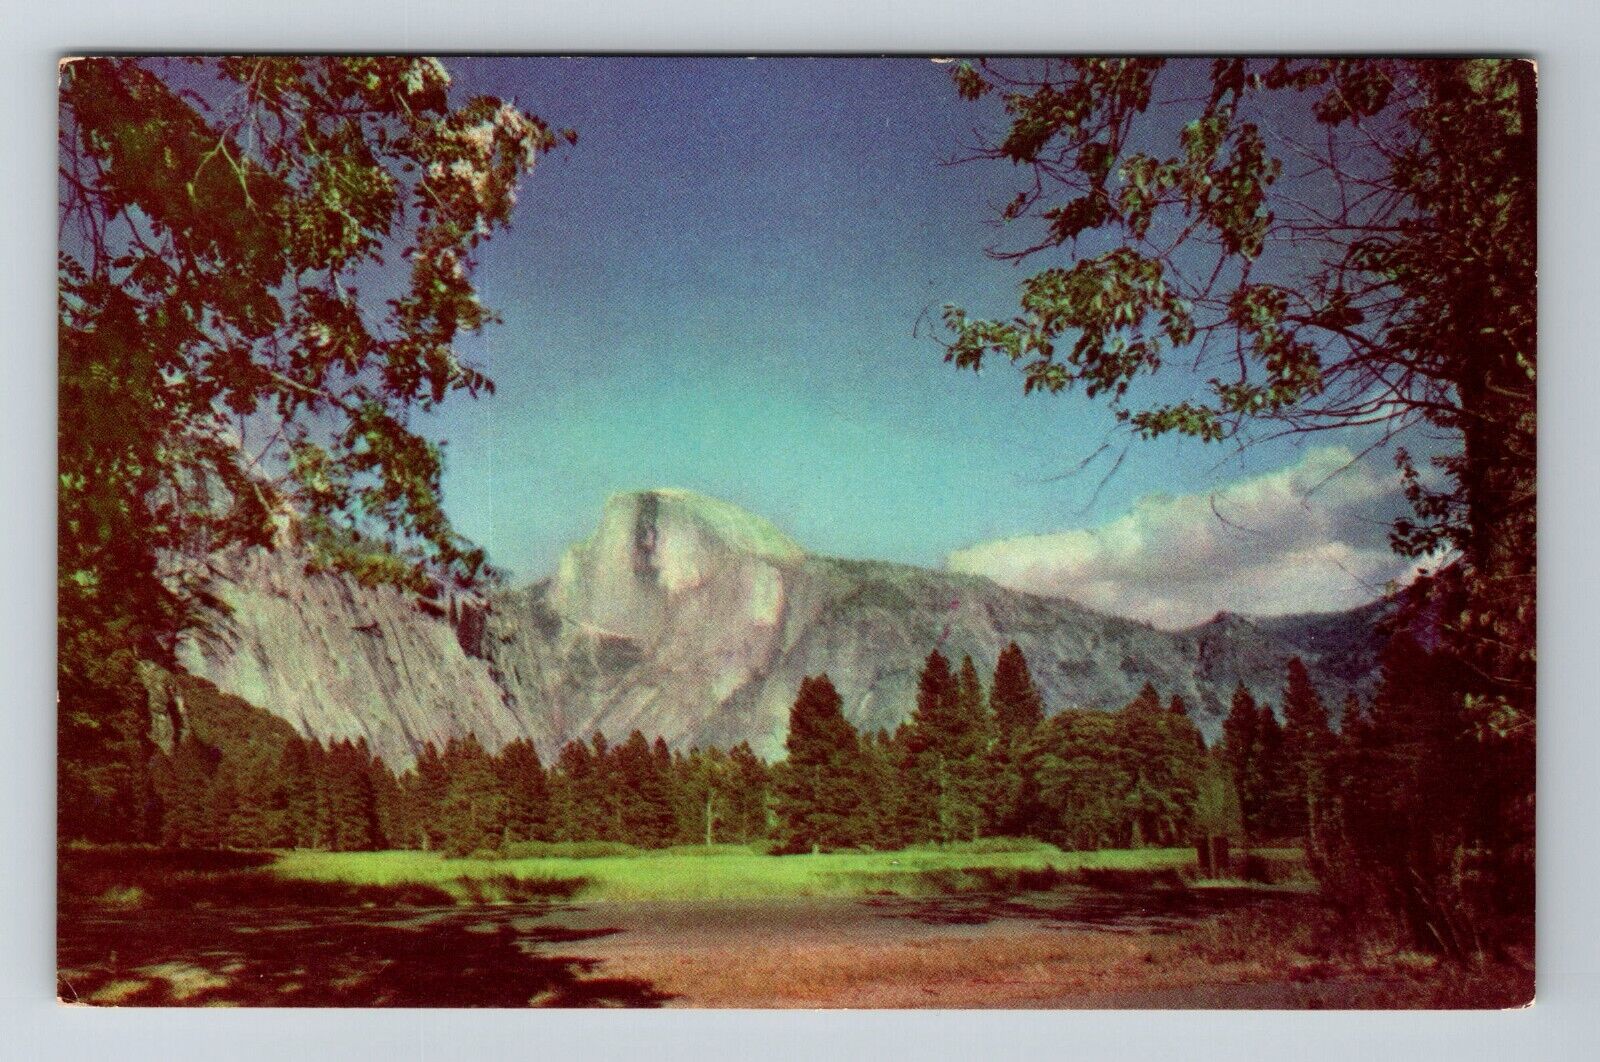 CA-California, Half Dome, Yosemite National Park, Scenic View, Vintage Postcard